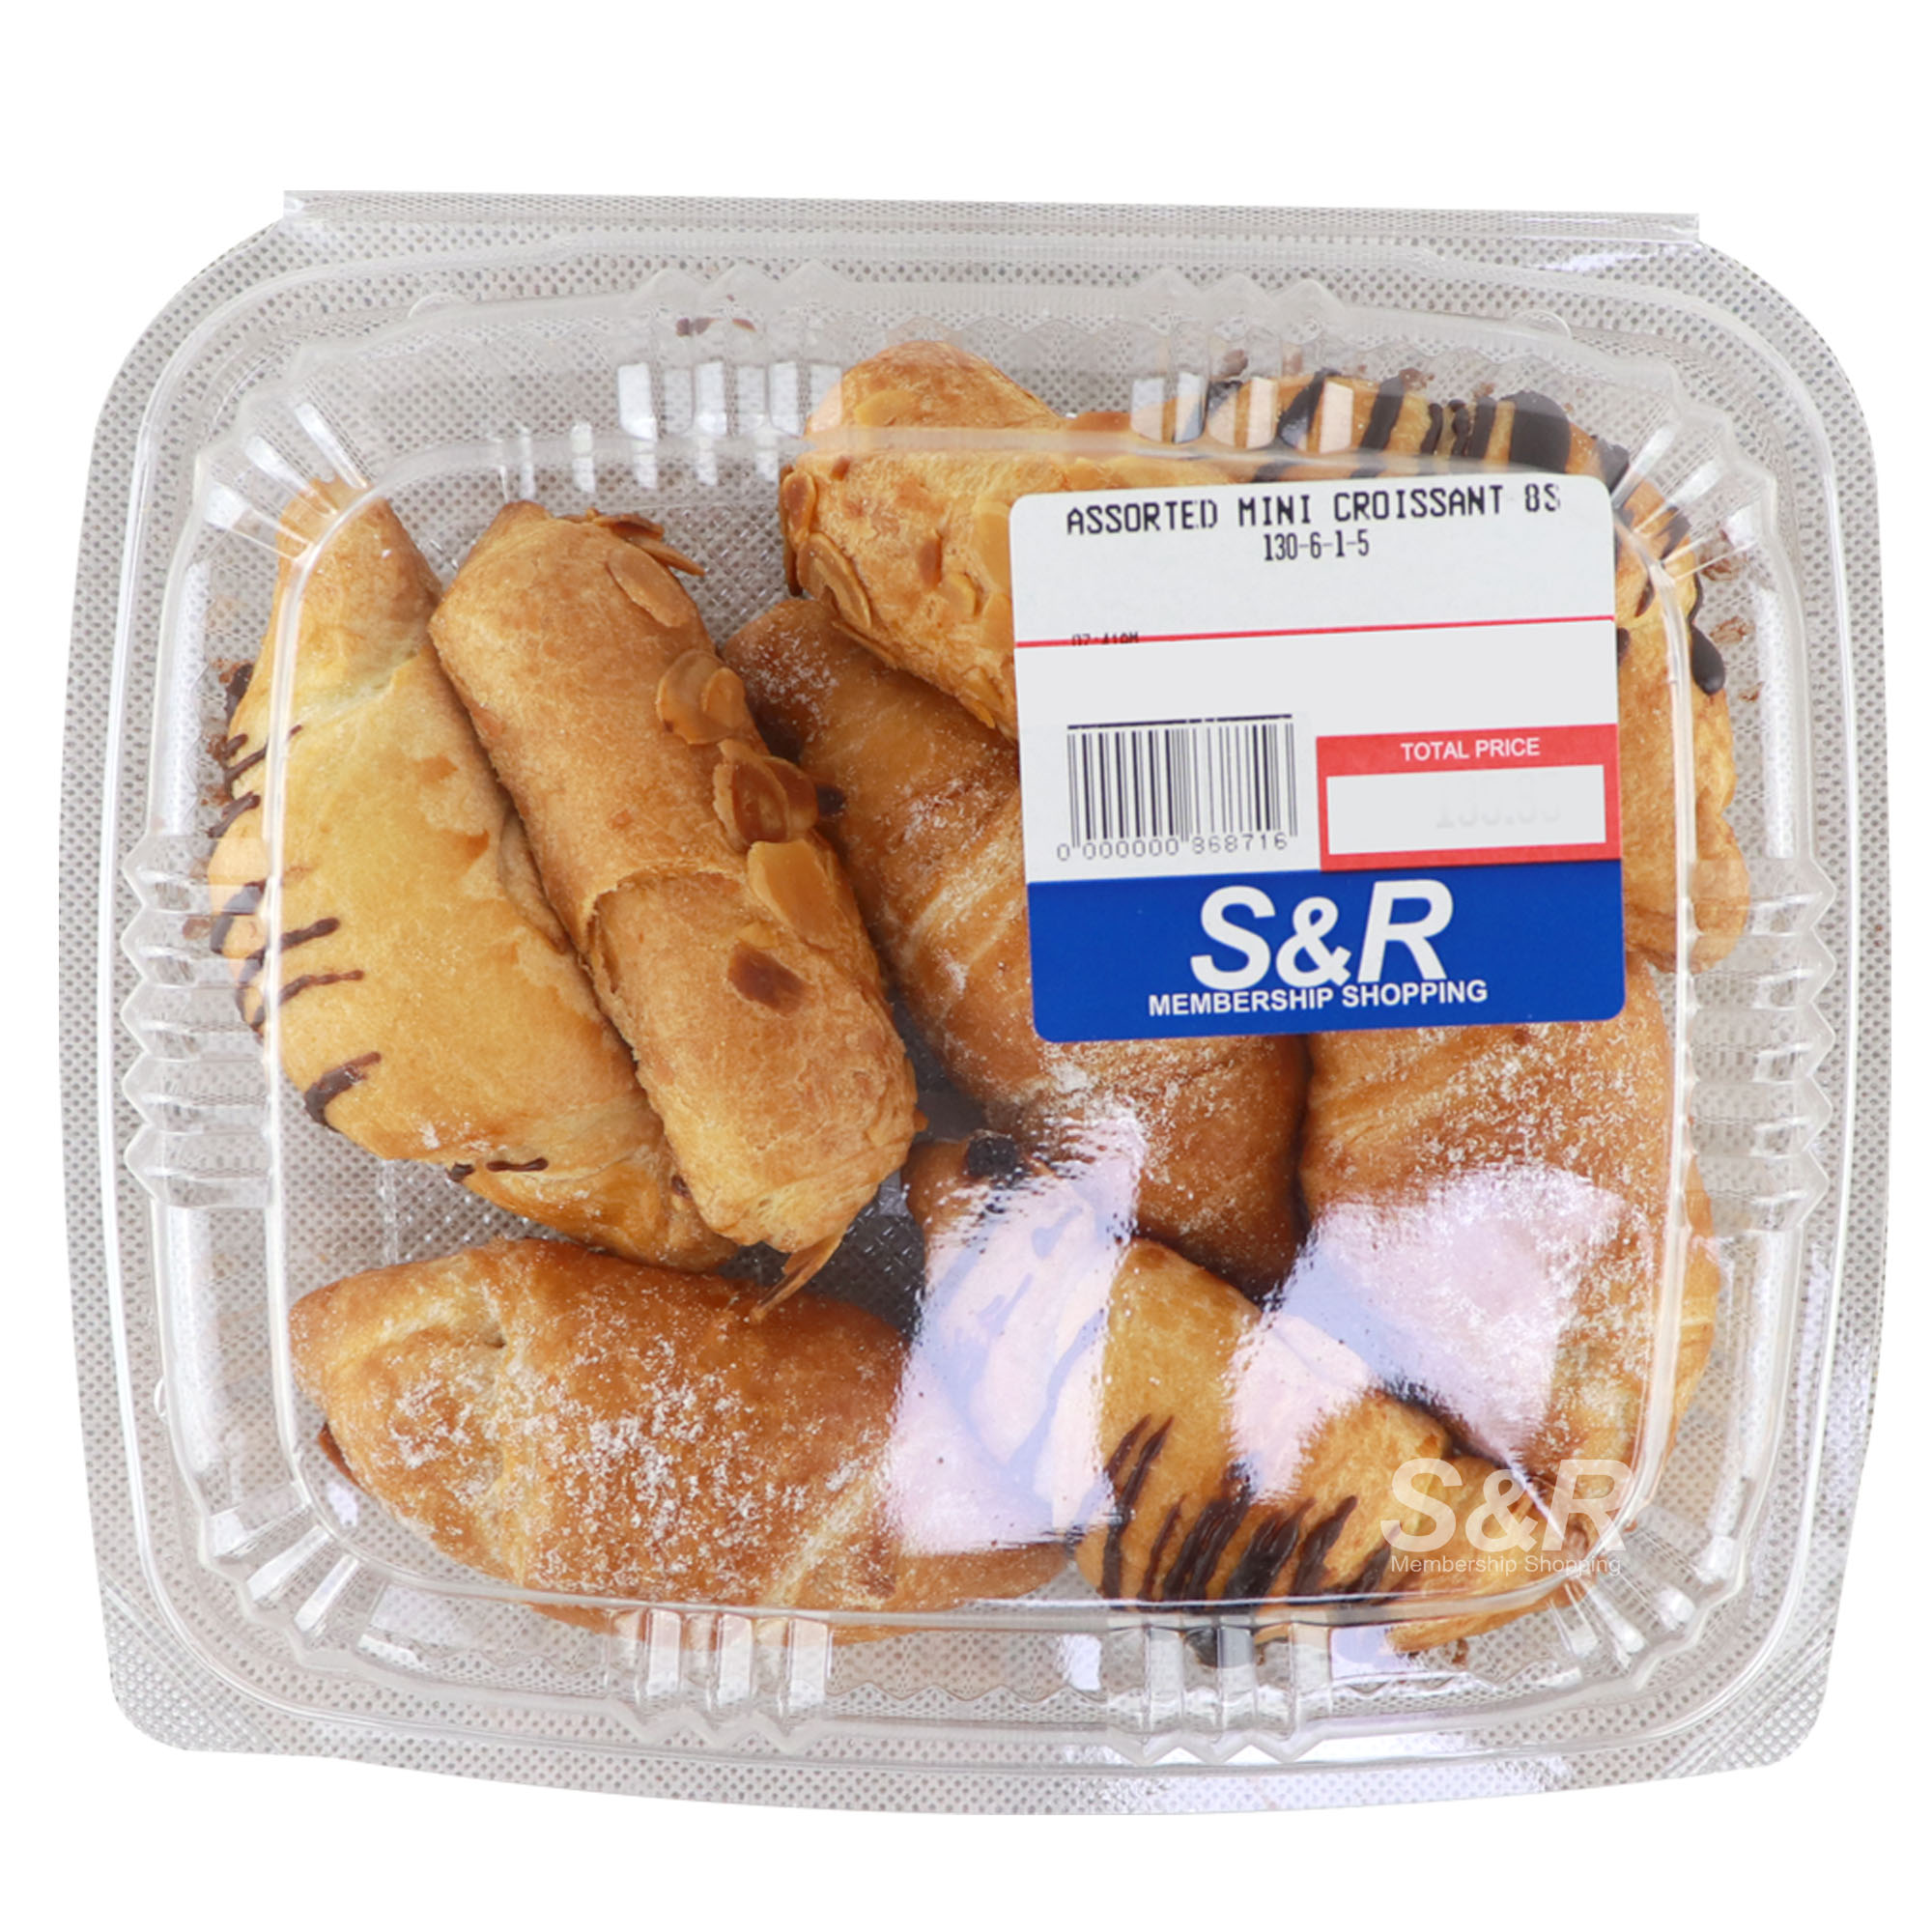 S&R Assorted Mini Croissants 8pcs